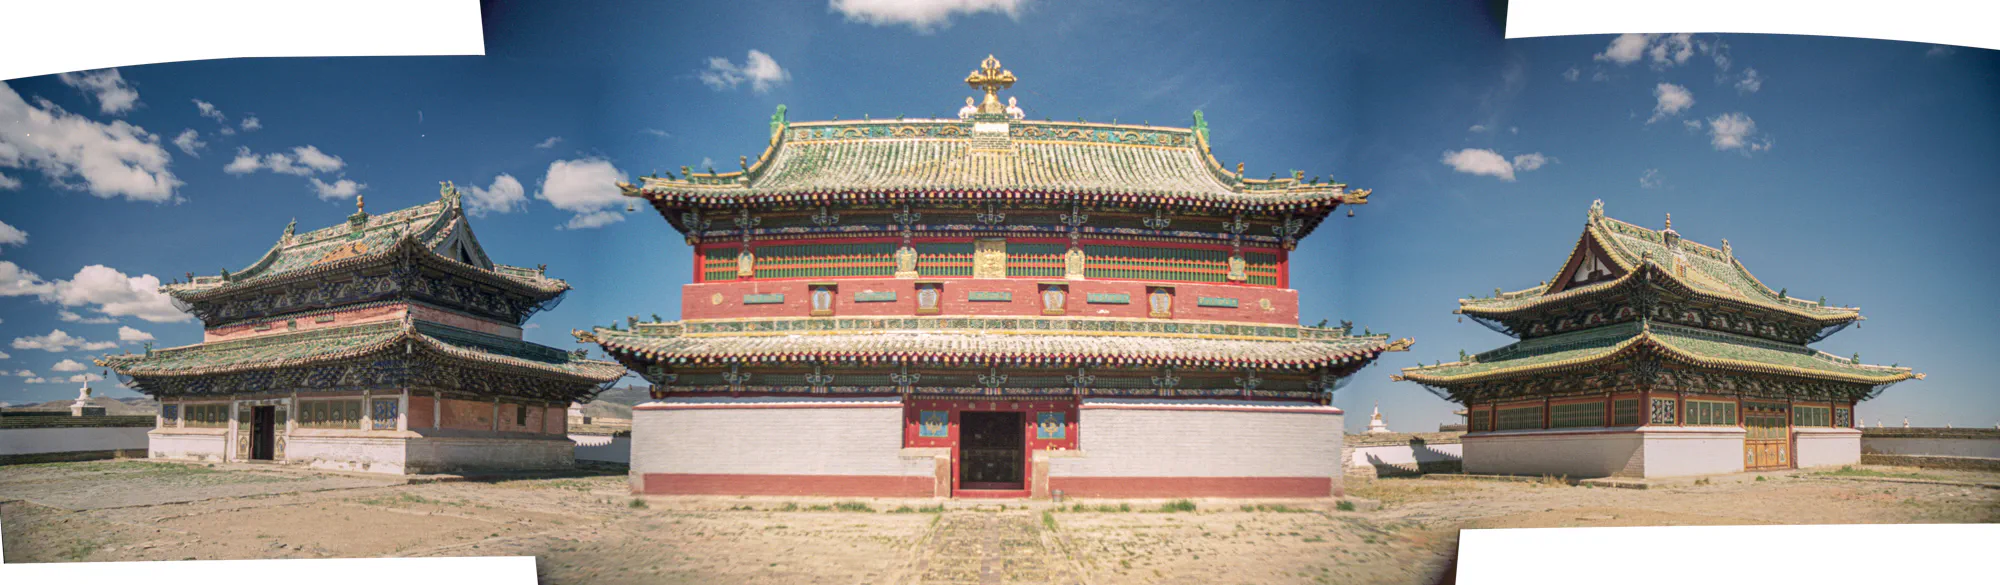 Erdene Zuu Monastery Temple Buildings